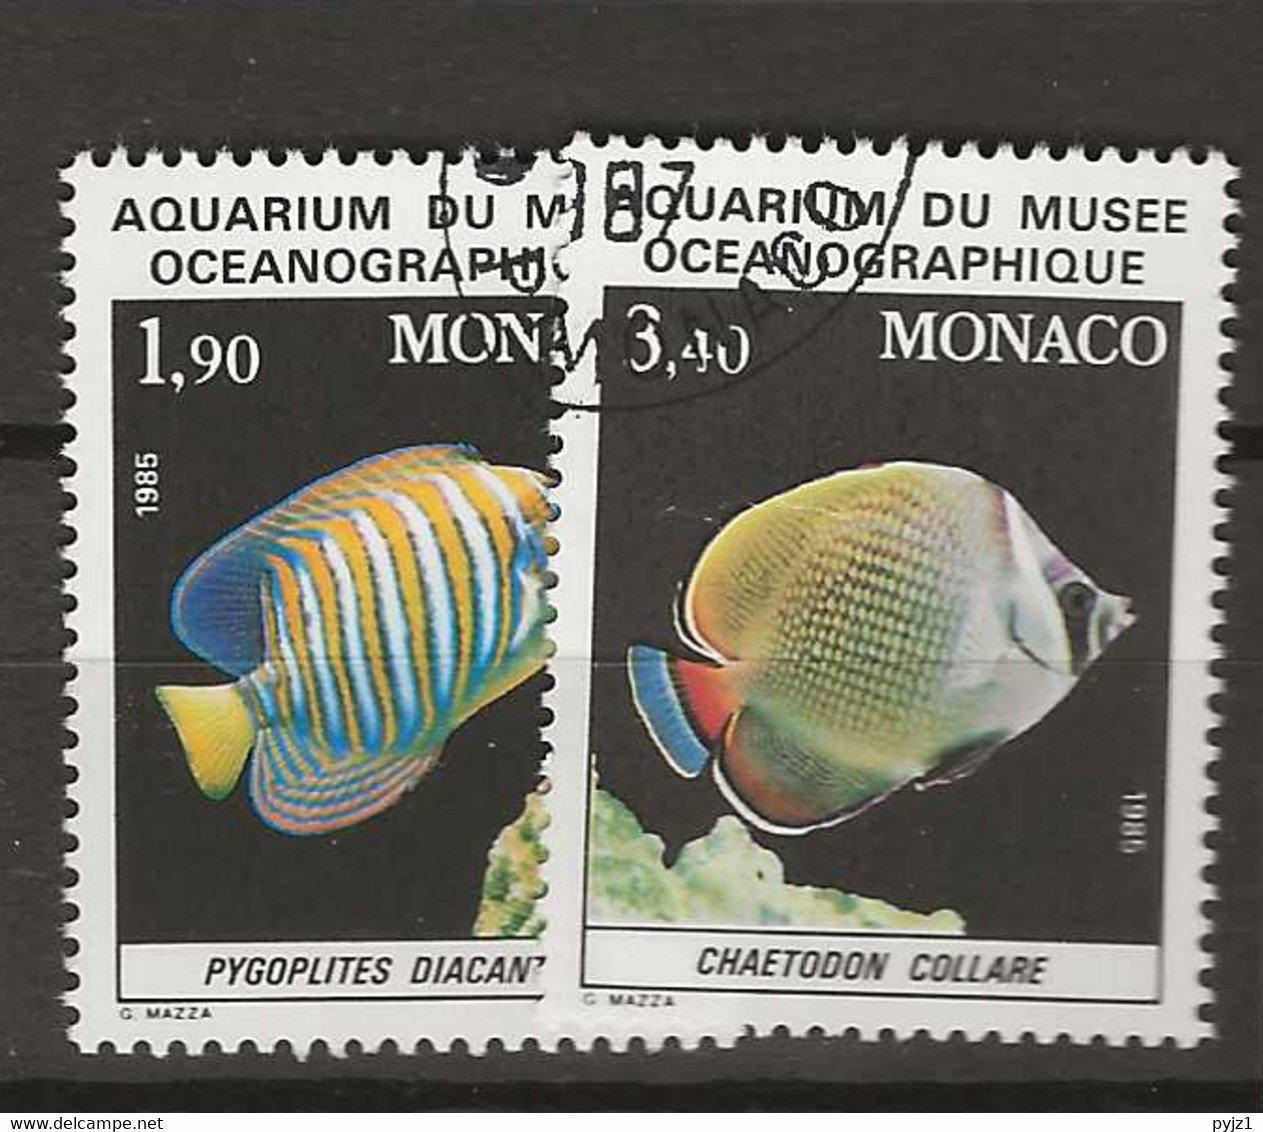 1986 USED Monaco, Mi 1766-67 - Used Stamps